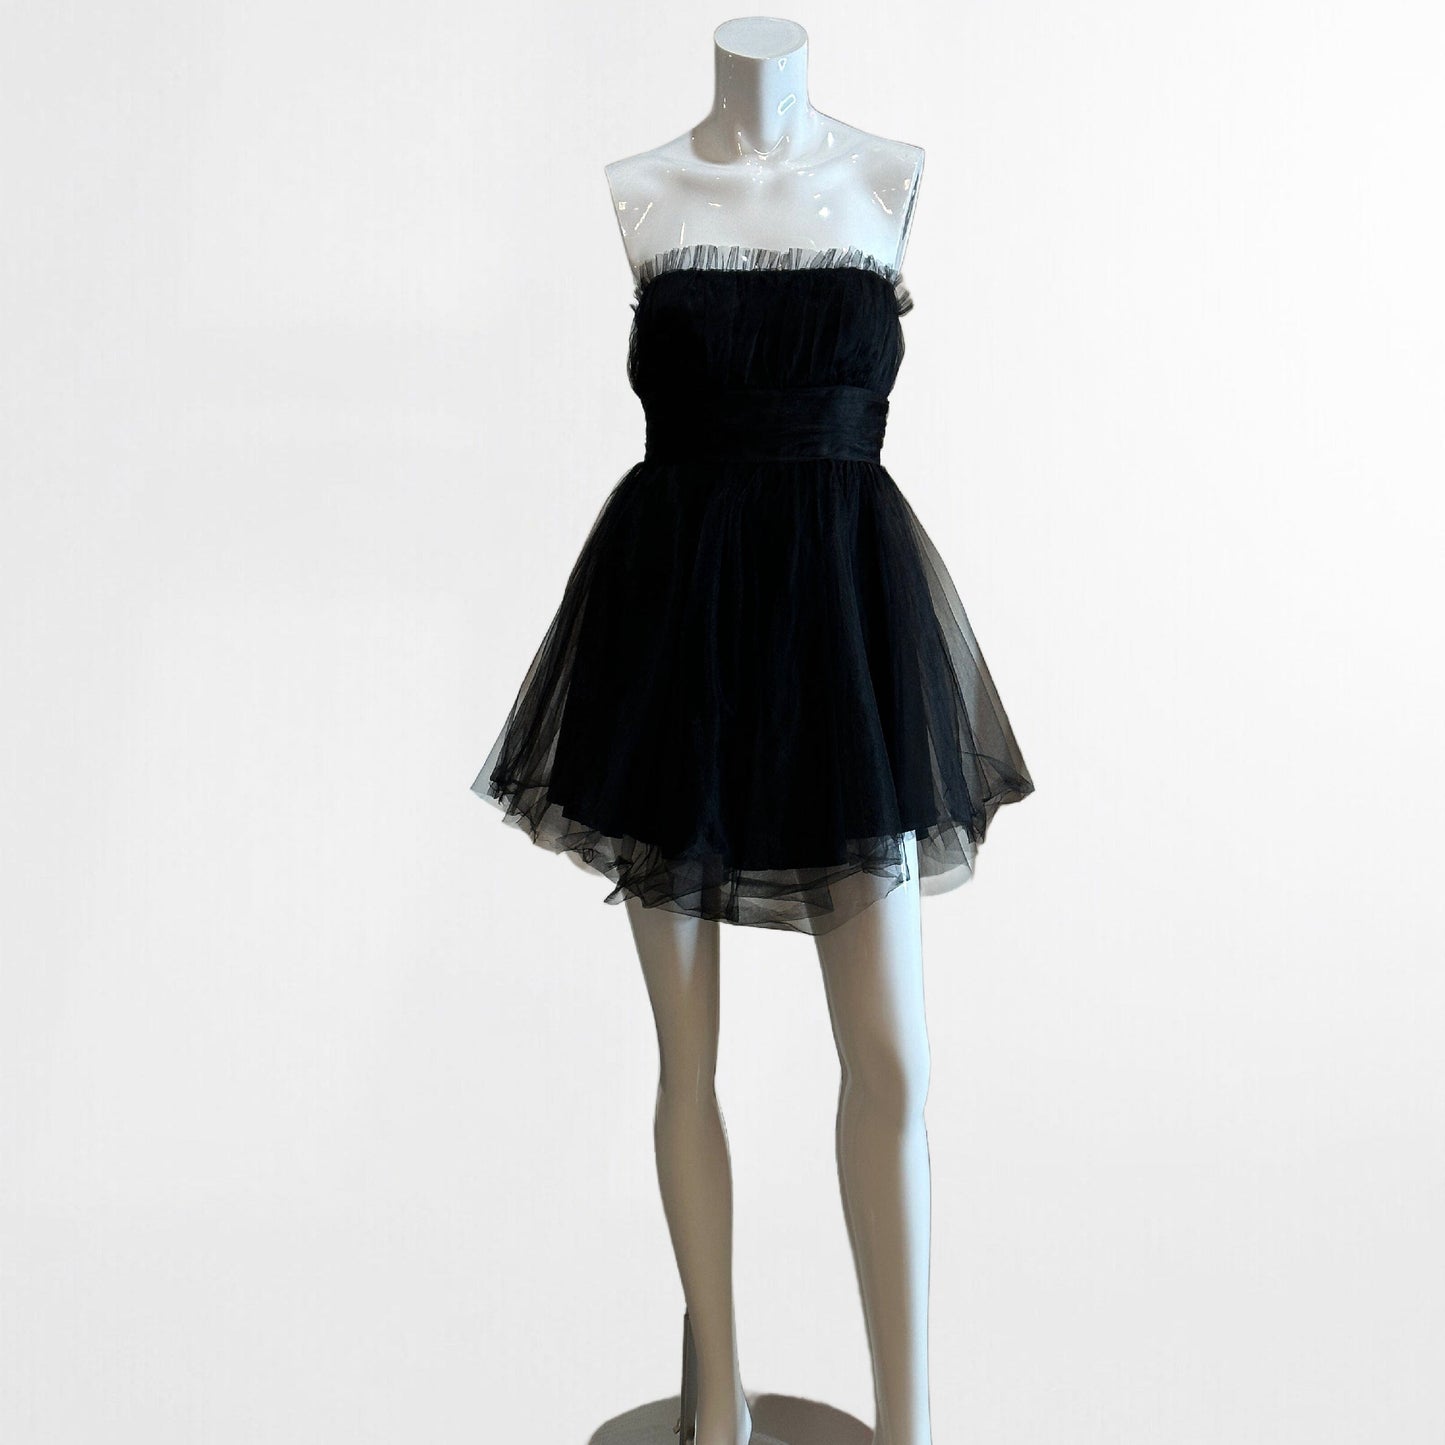 Strapless Tulle Empire Waist Mini Dress Posh Society Boutique Dresses Visit poshsocietyhb